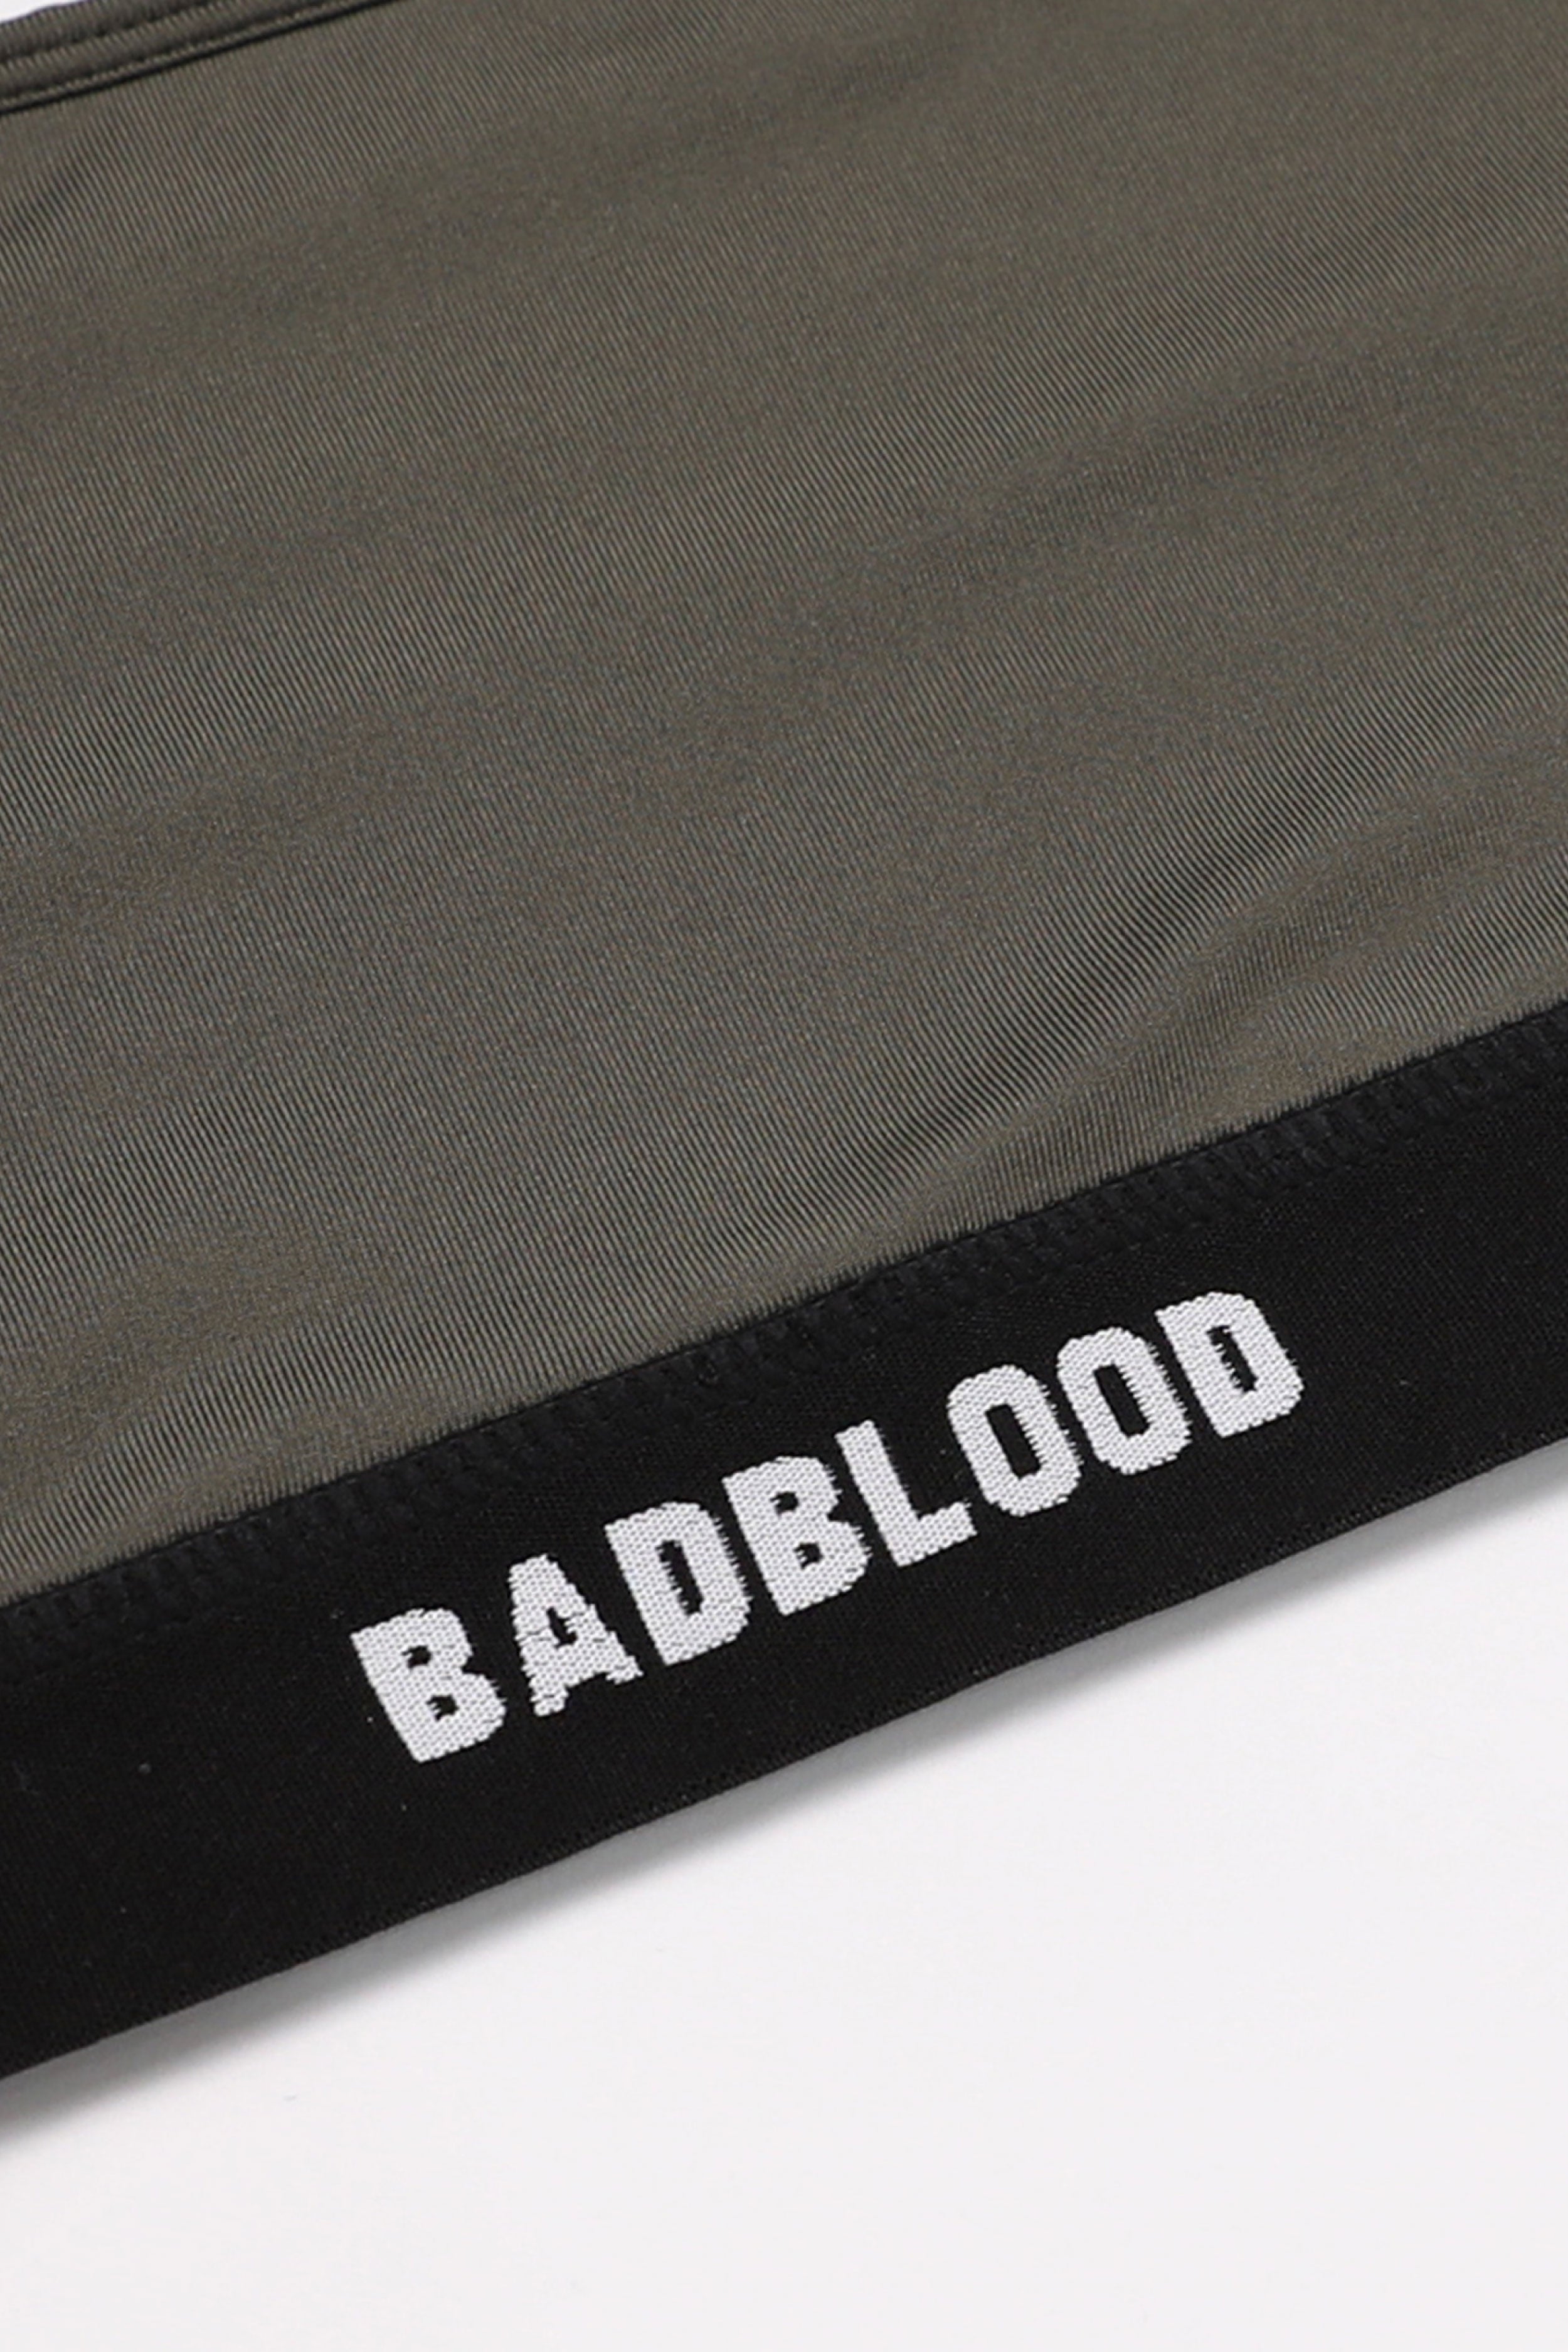 Badblood 小號標誌抹胸胸罩 卡其色